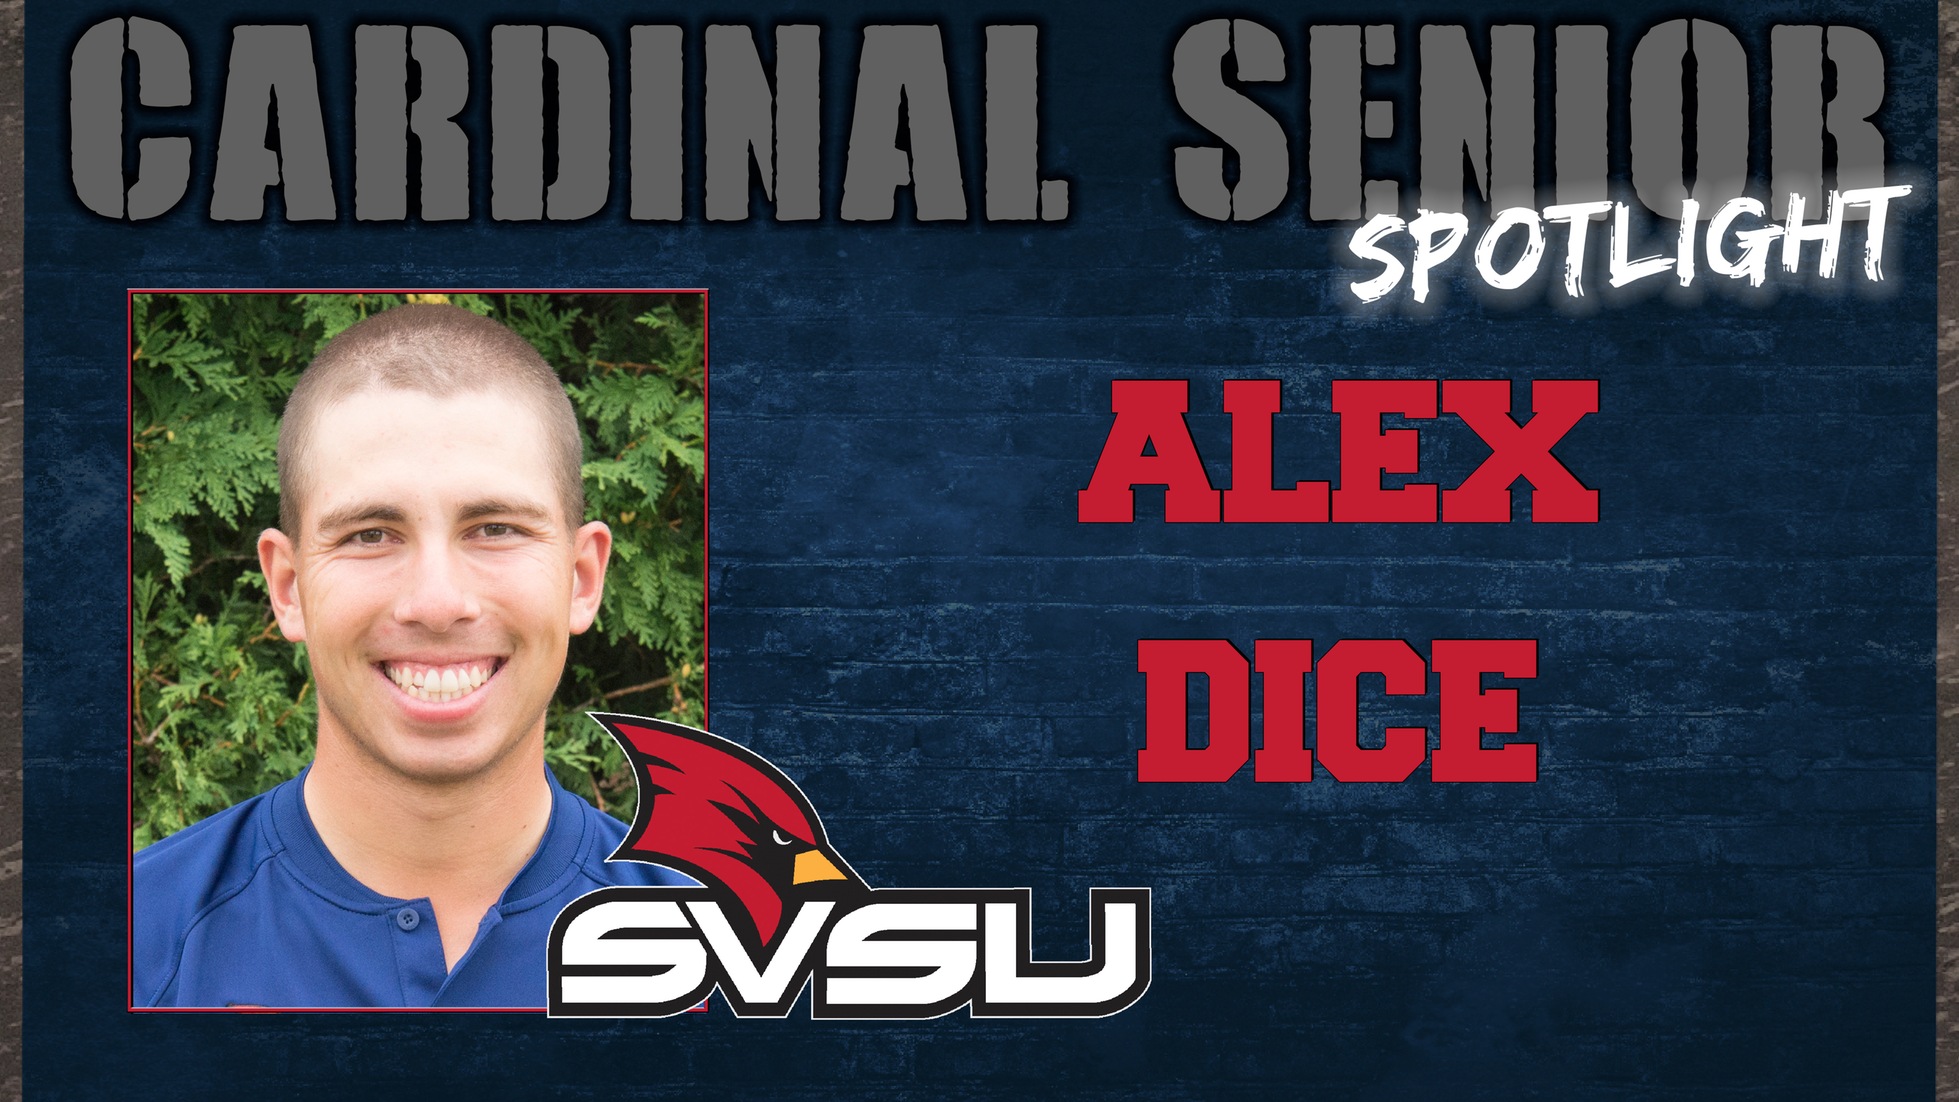 SVSU Cardinal Senior Spotlight - Alex Dice